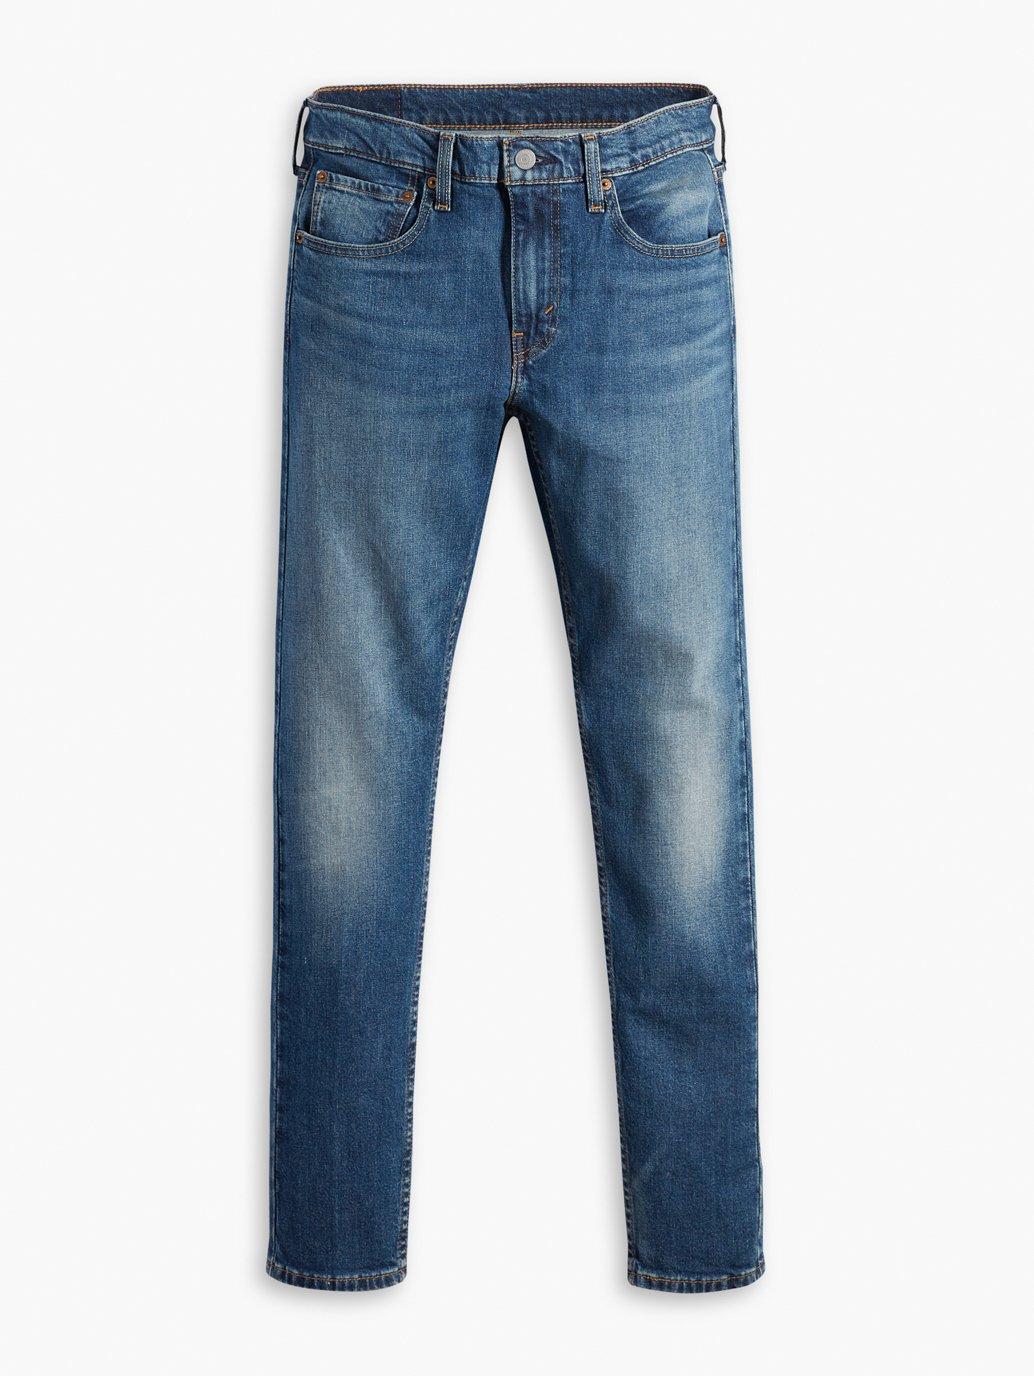 Buy Levi's® Men's Skinny Taper Jeans | Levi’s Official Online Store SG